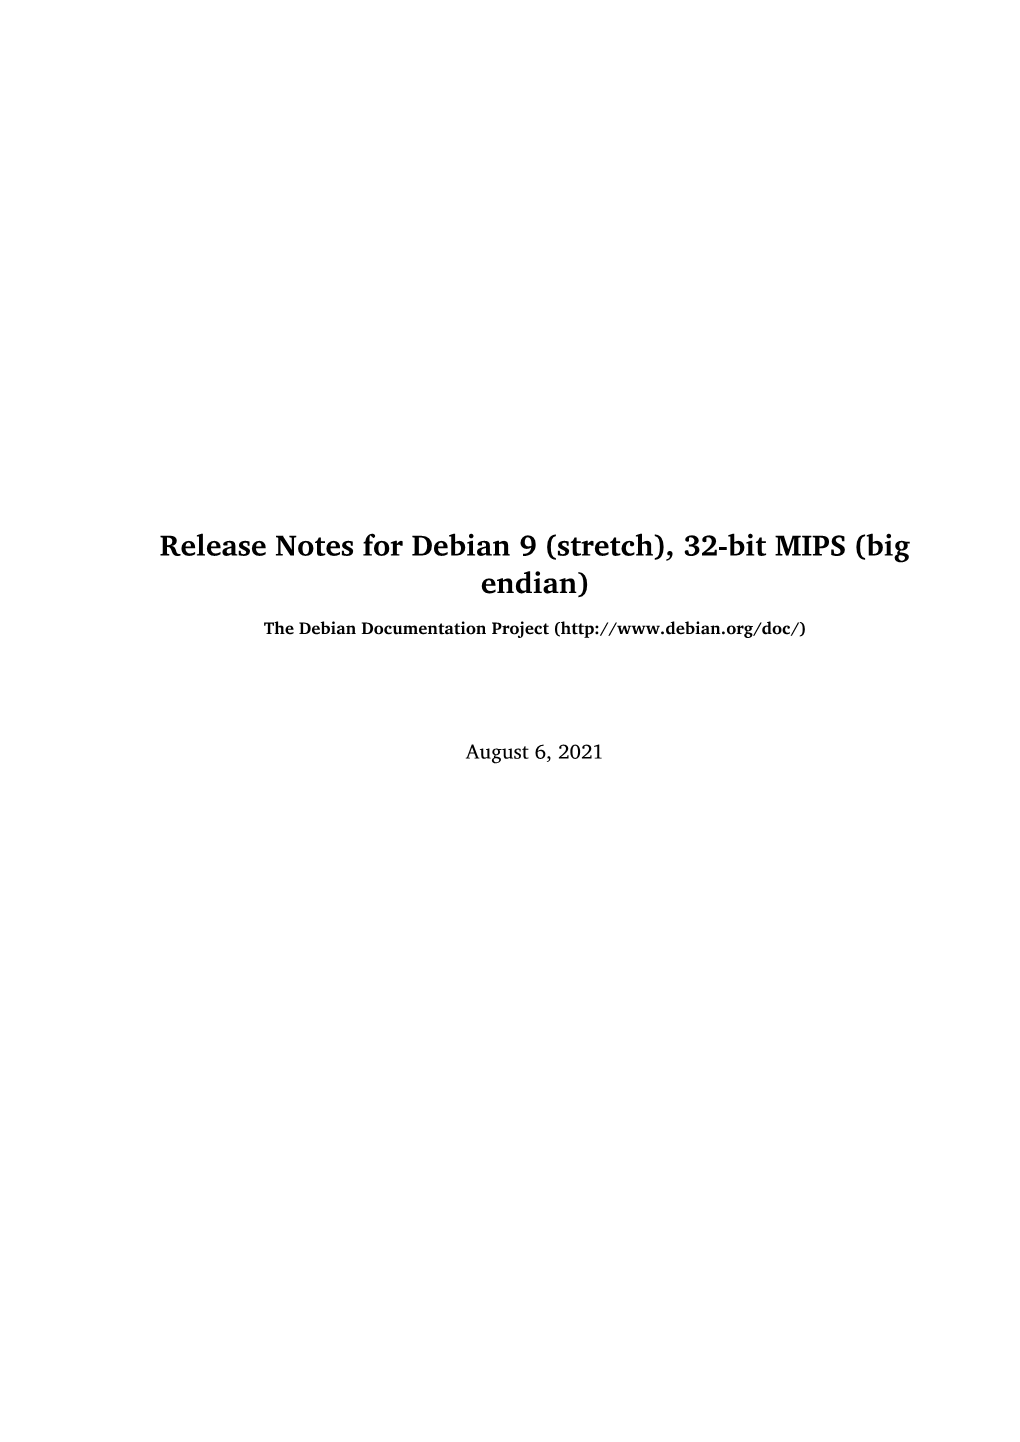 Release Notes for Debian 9 (Stretch), 32-Bit MIPS (Big Endian)